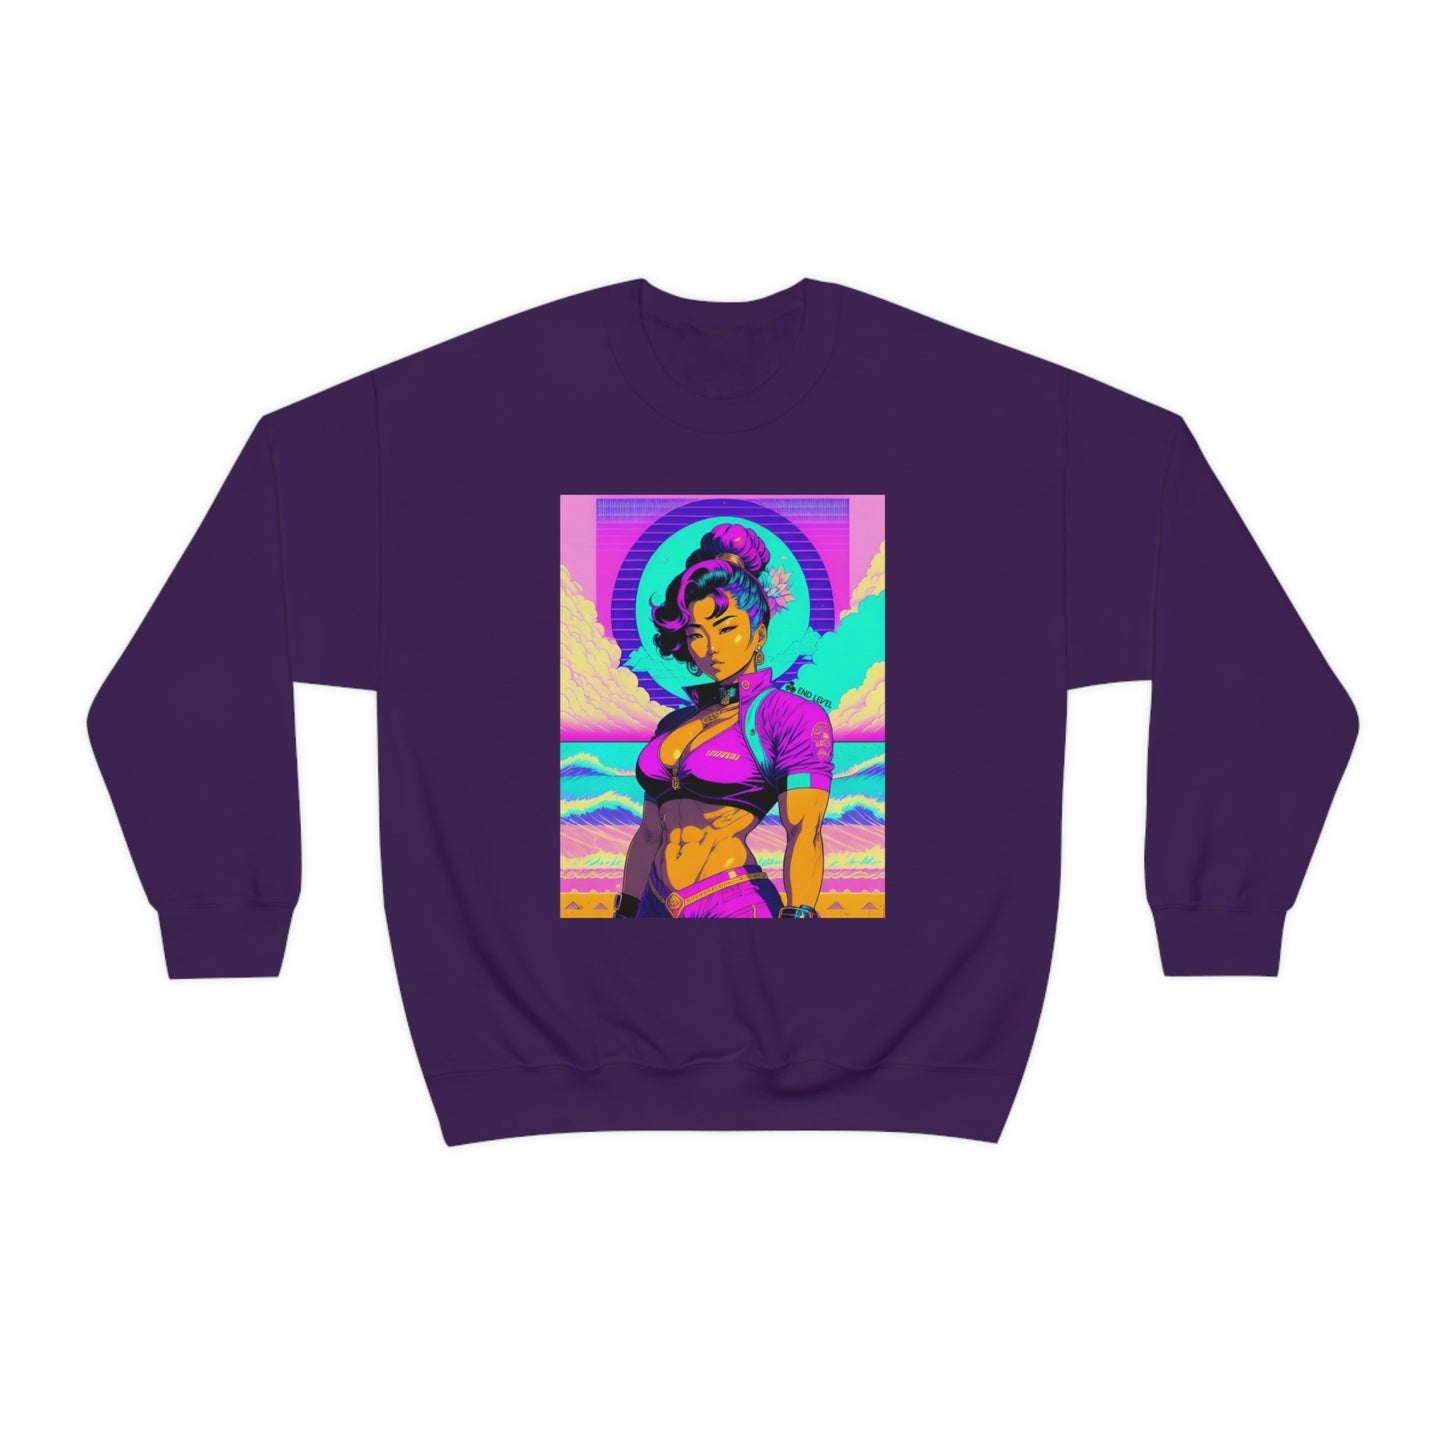 Purple sweatshirt with Lady Lotus design.